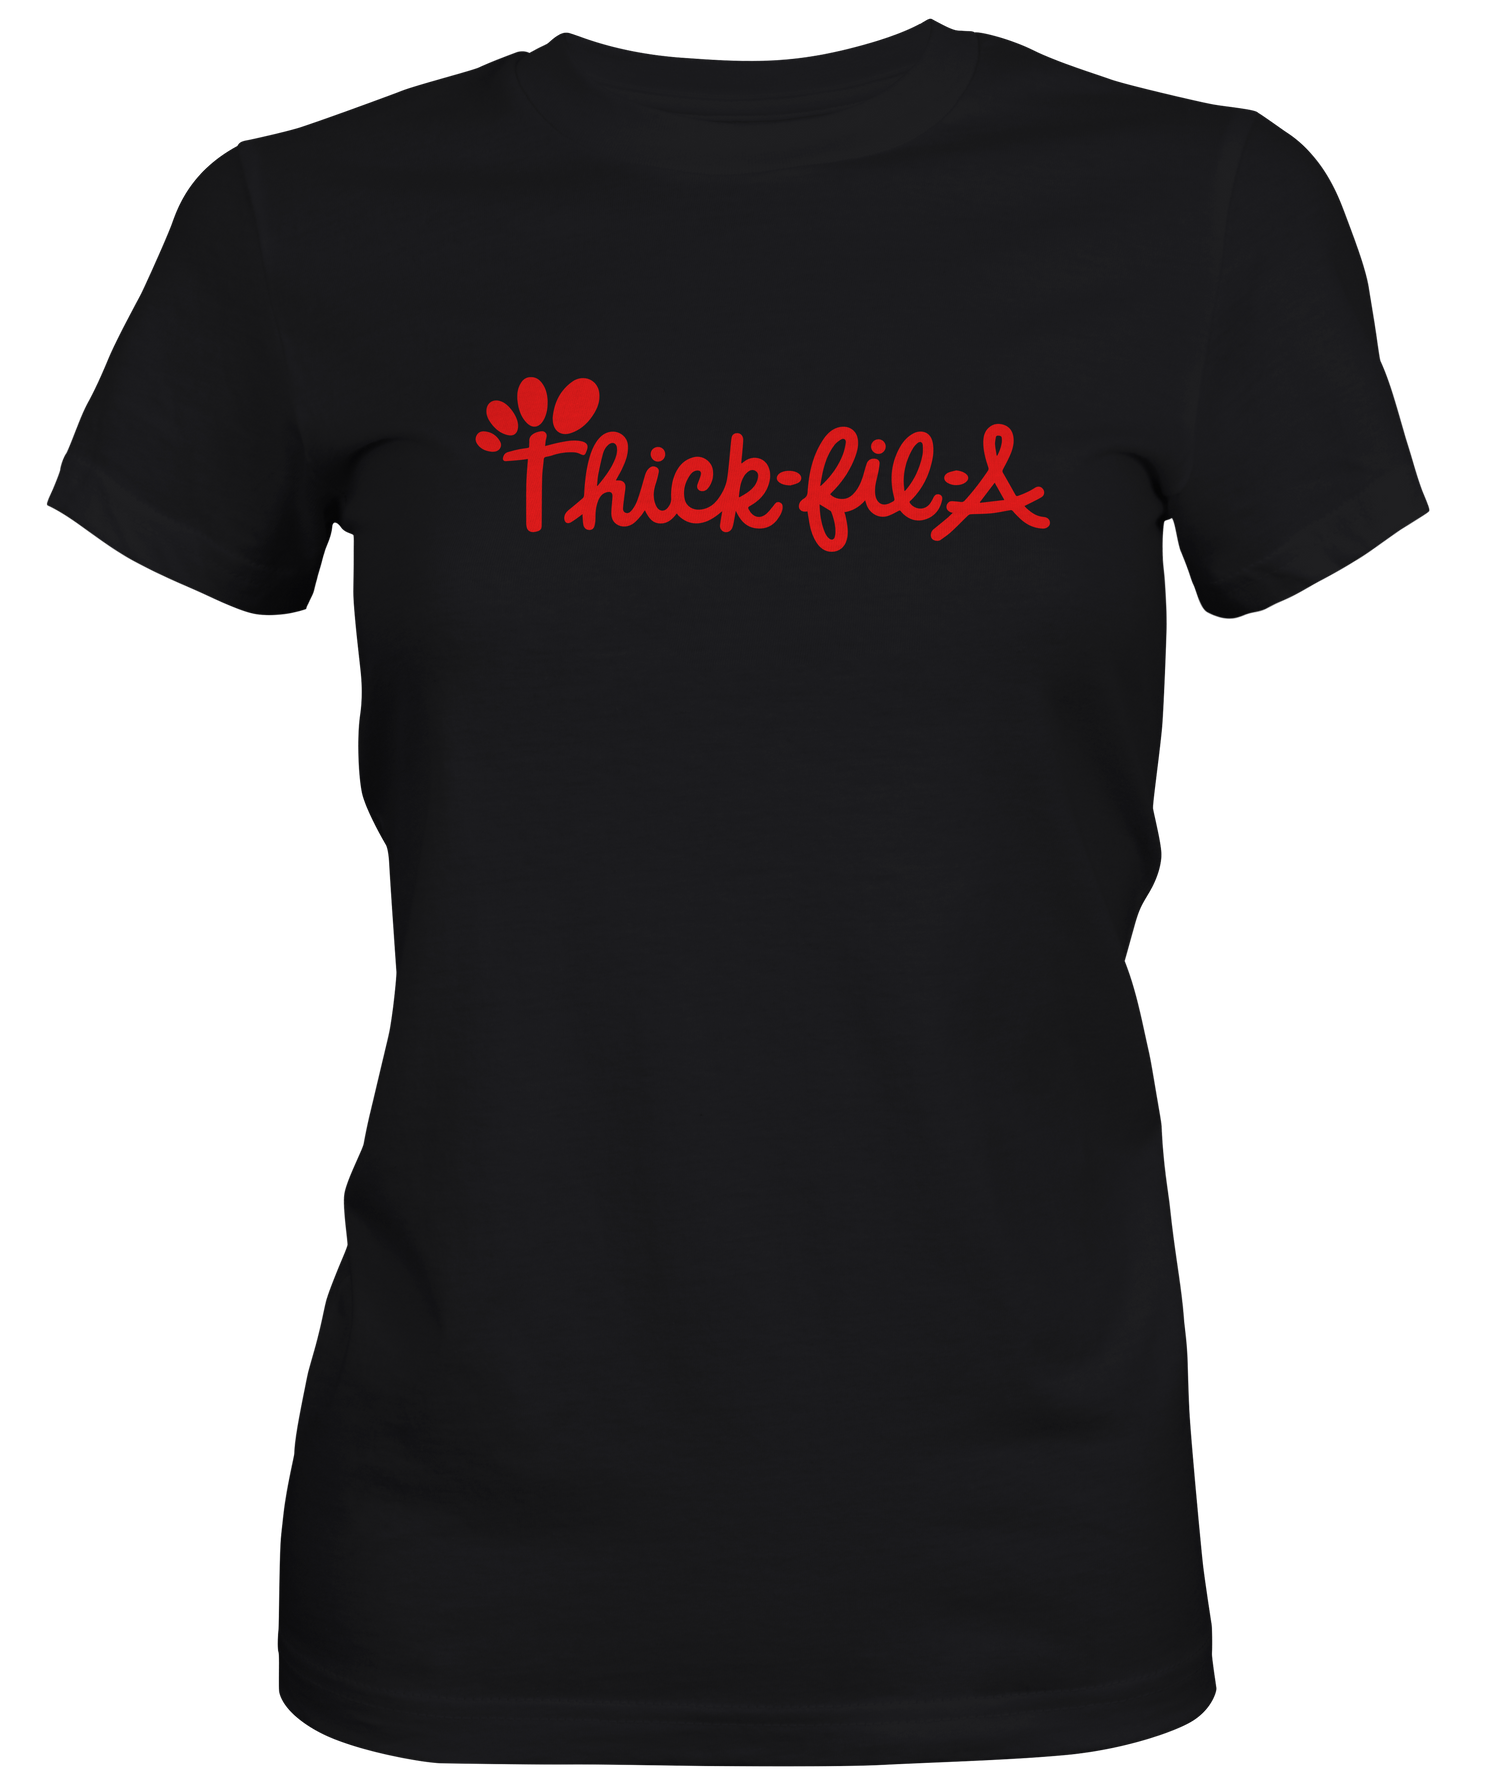 Thick-fil-A Woman's T-shirts